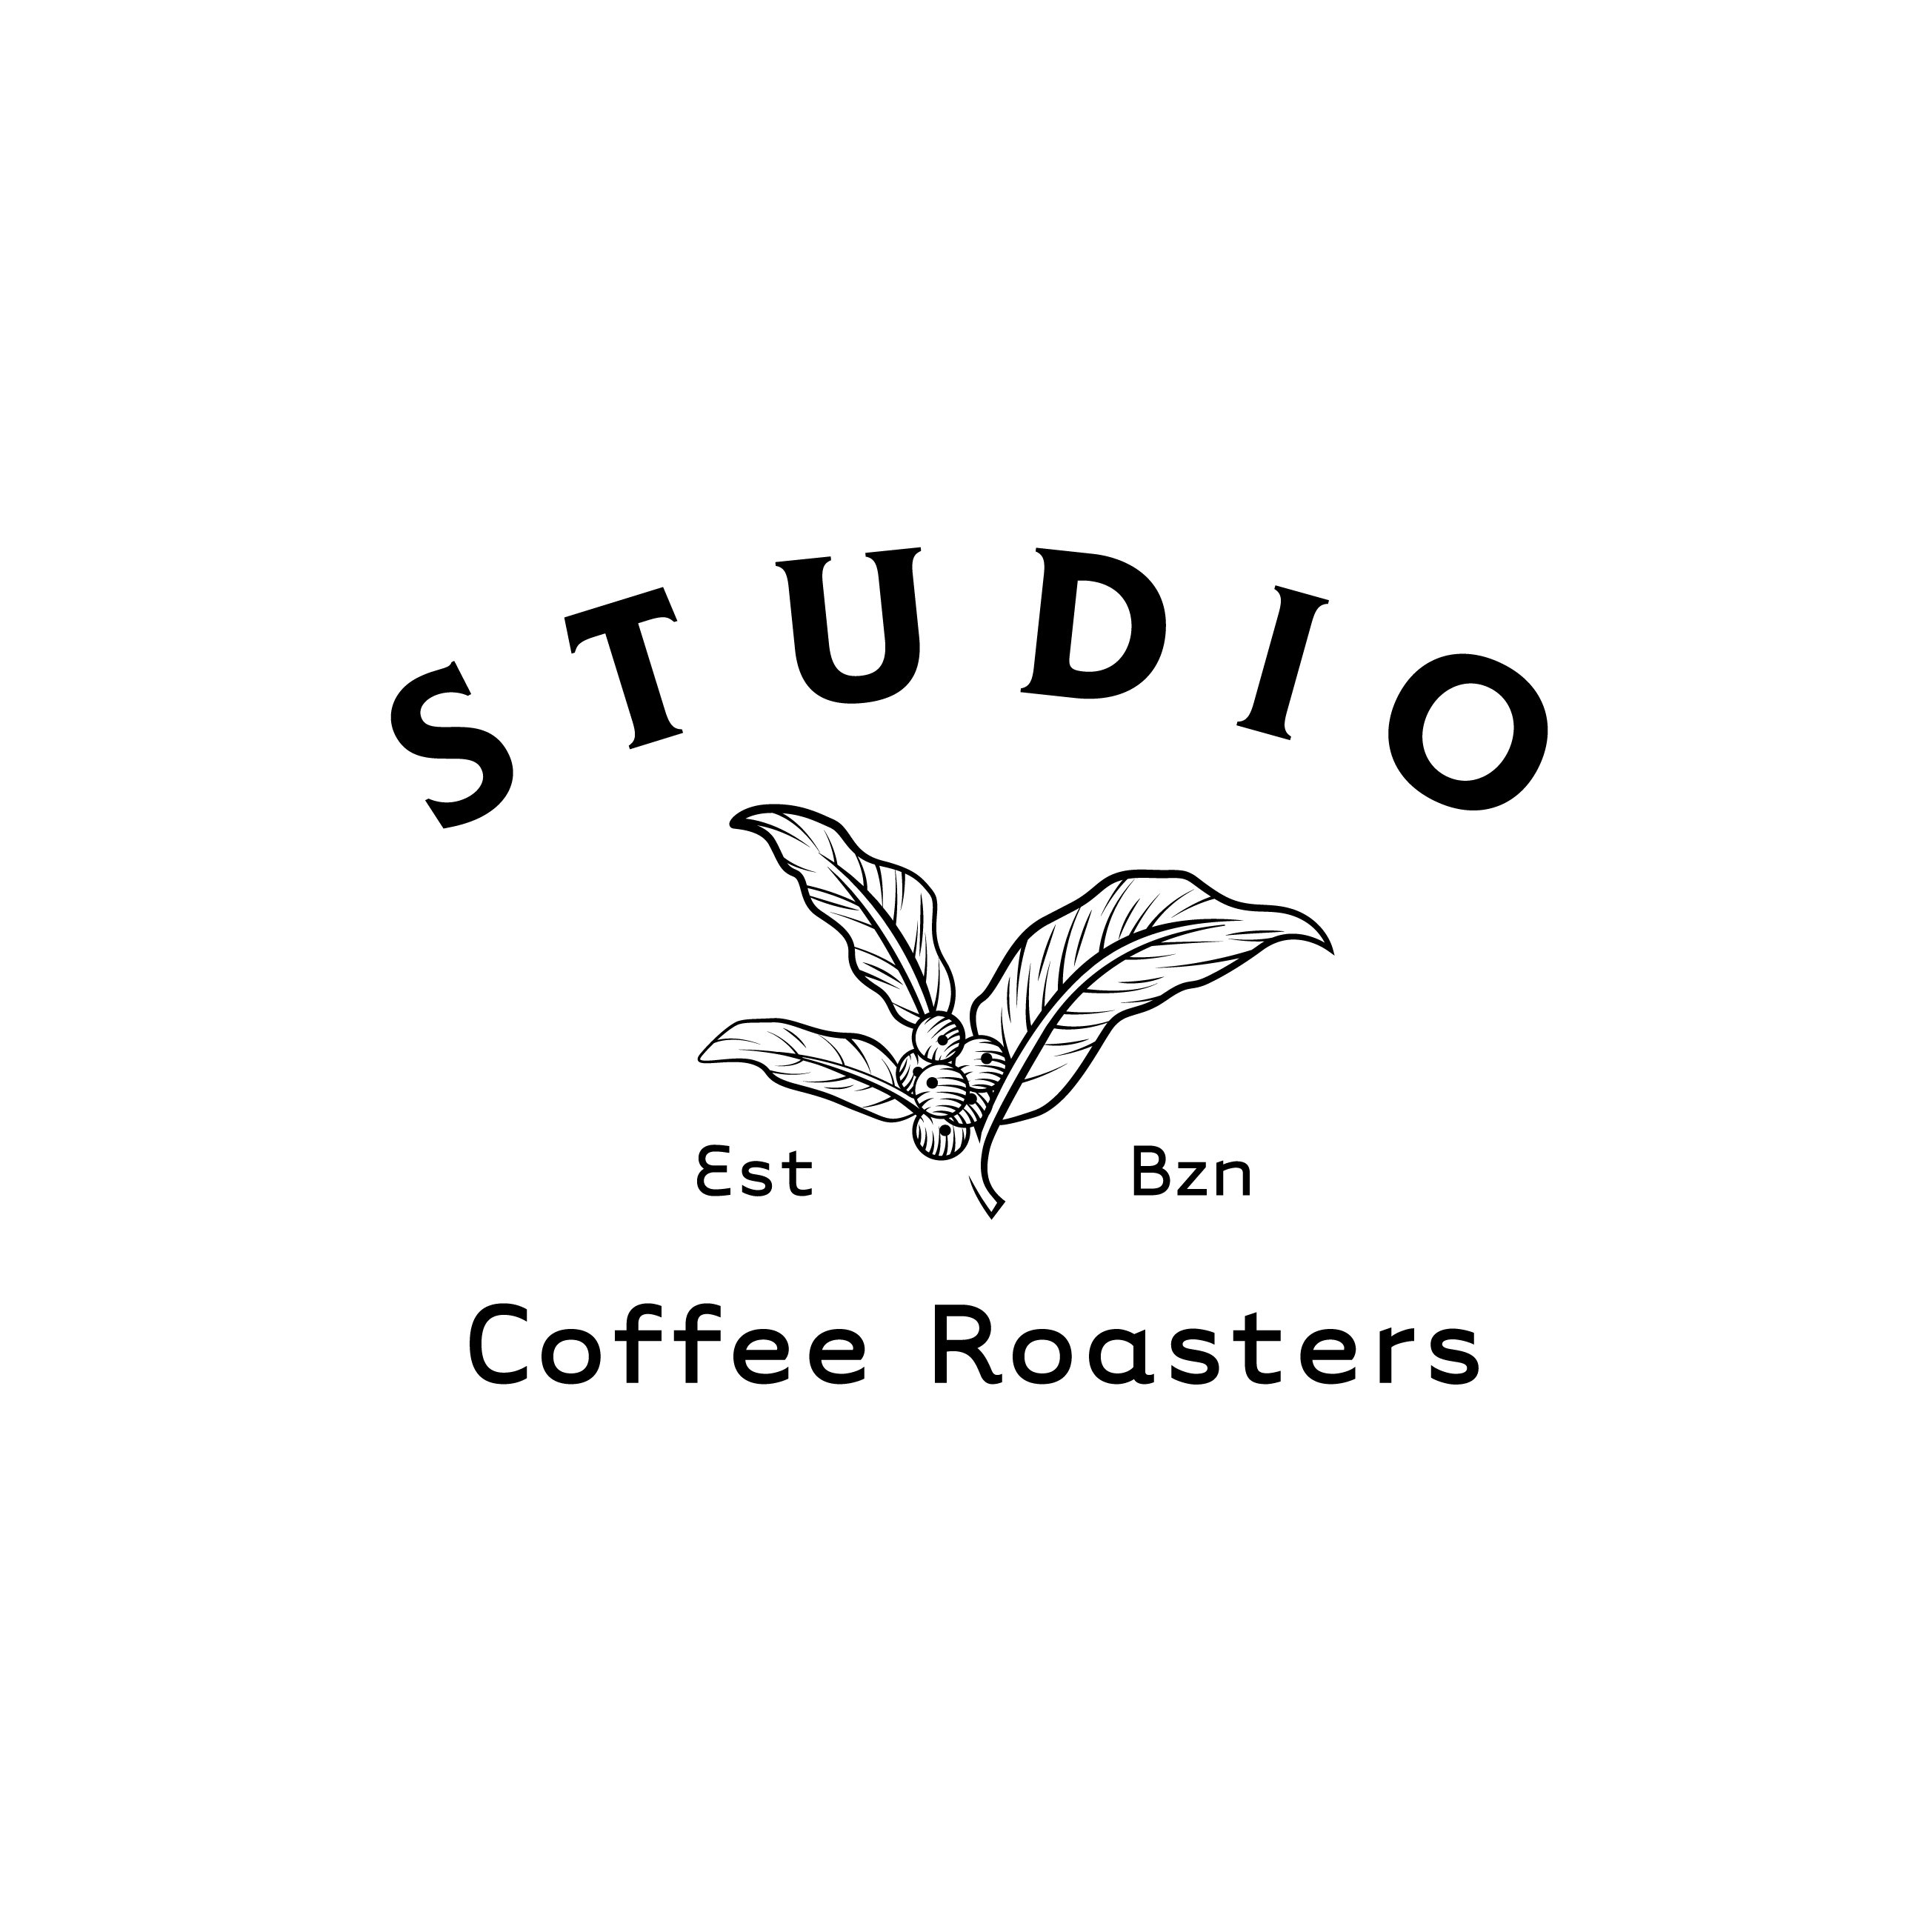 Previous Happening: Introducing Studio Coffee Roasters!